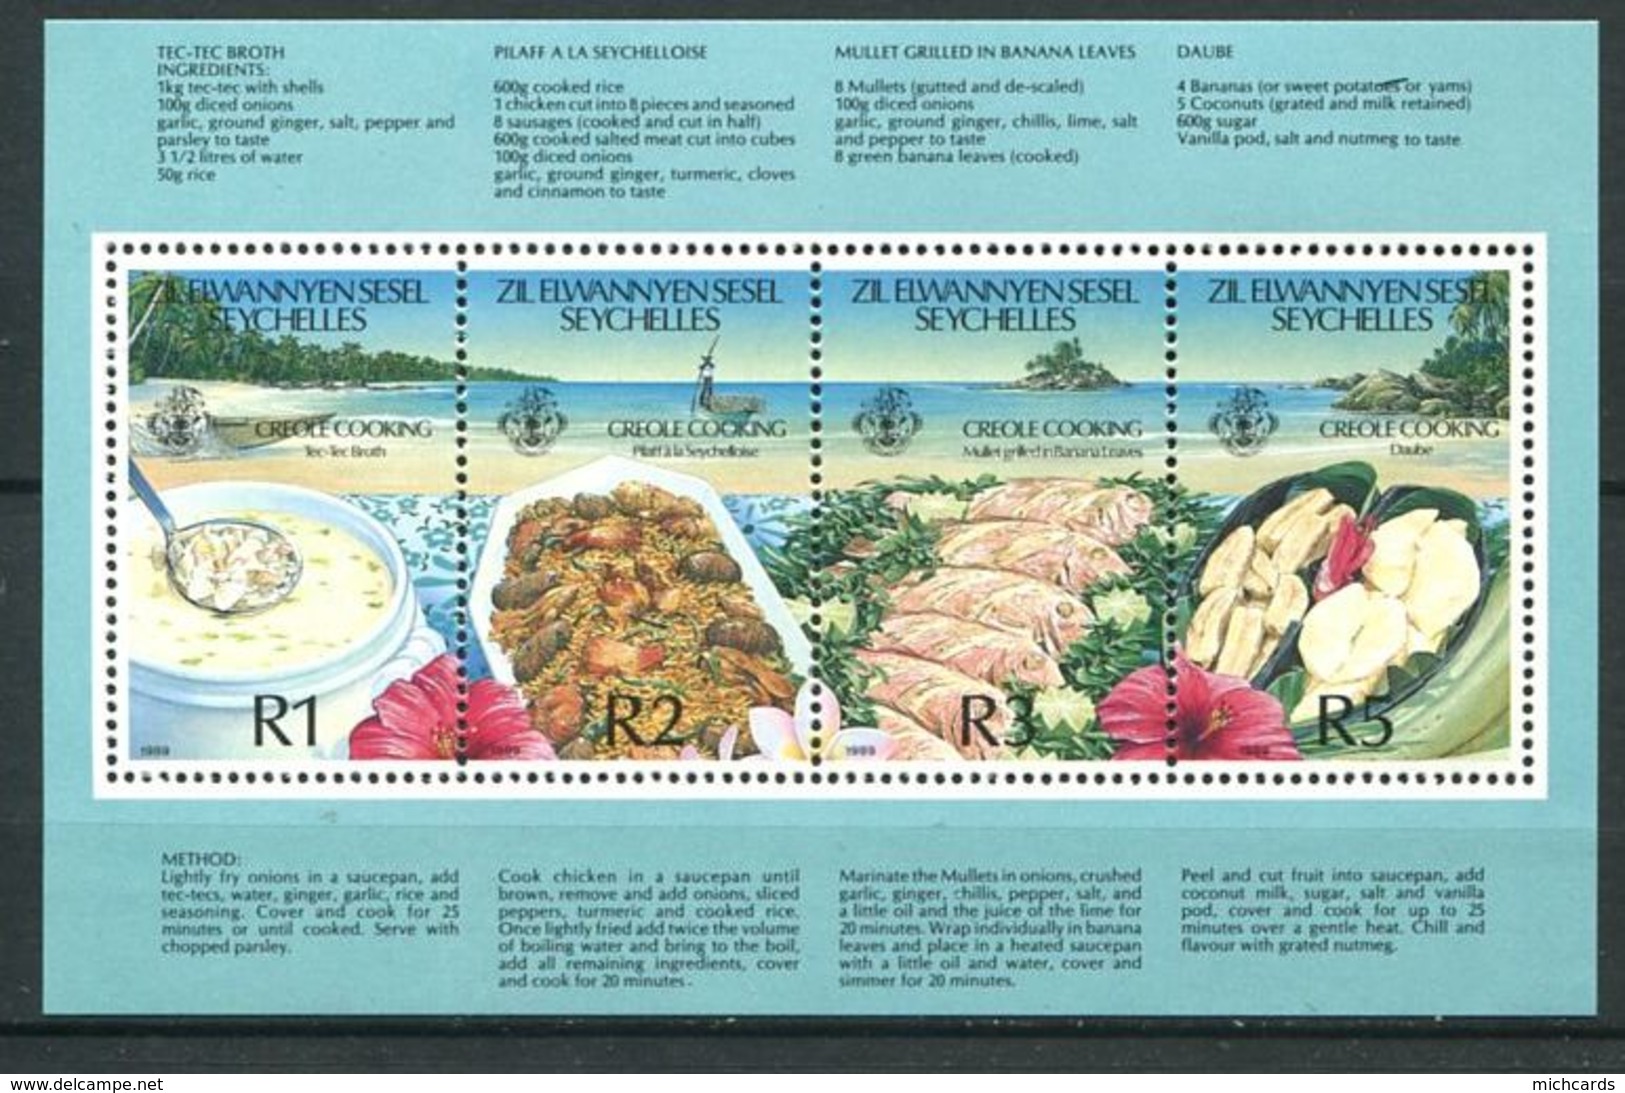 234 ZIL ELWANNYEN SESEL Seychelles 1989 - Yvert BF 7 - Gastronomie Cuisine Creole - Neuf ** (MNH) Sans Charniere - Seychelles (1976-...)